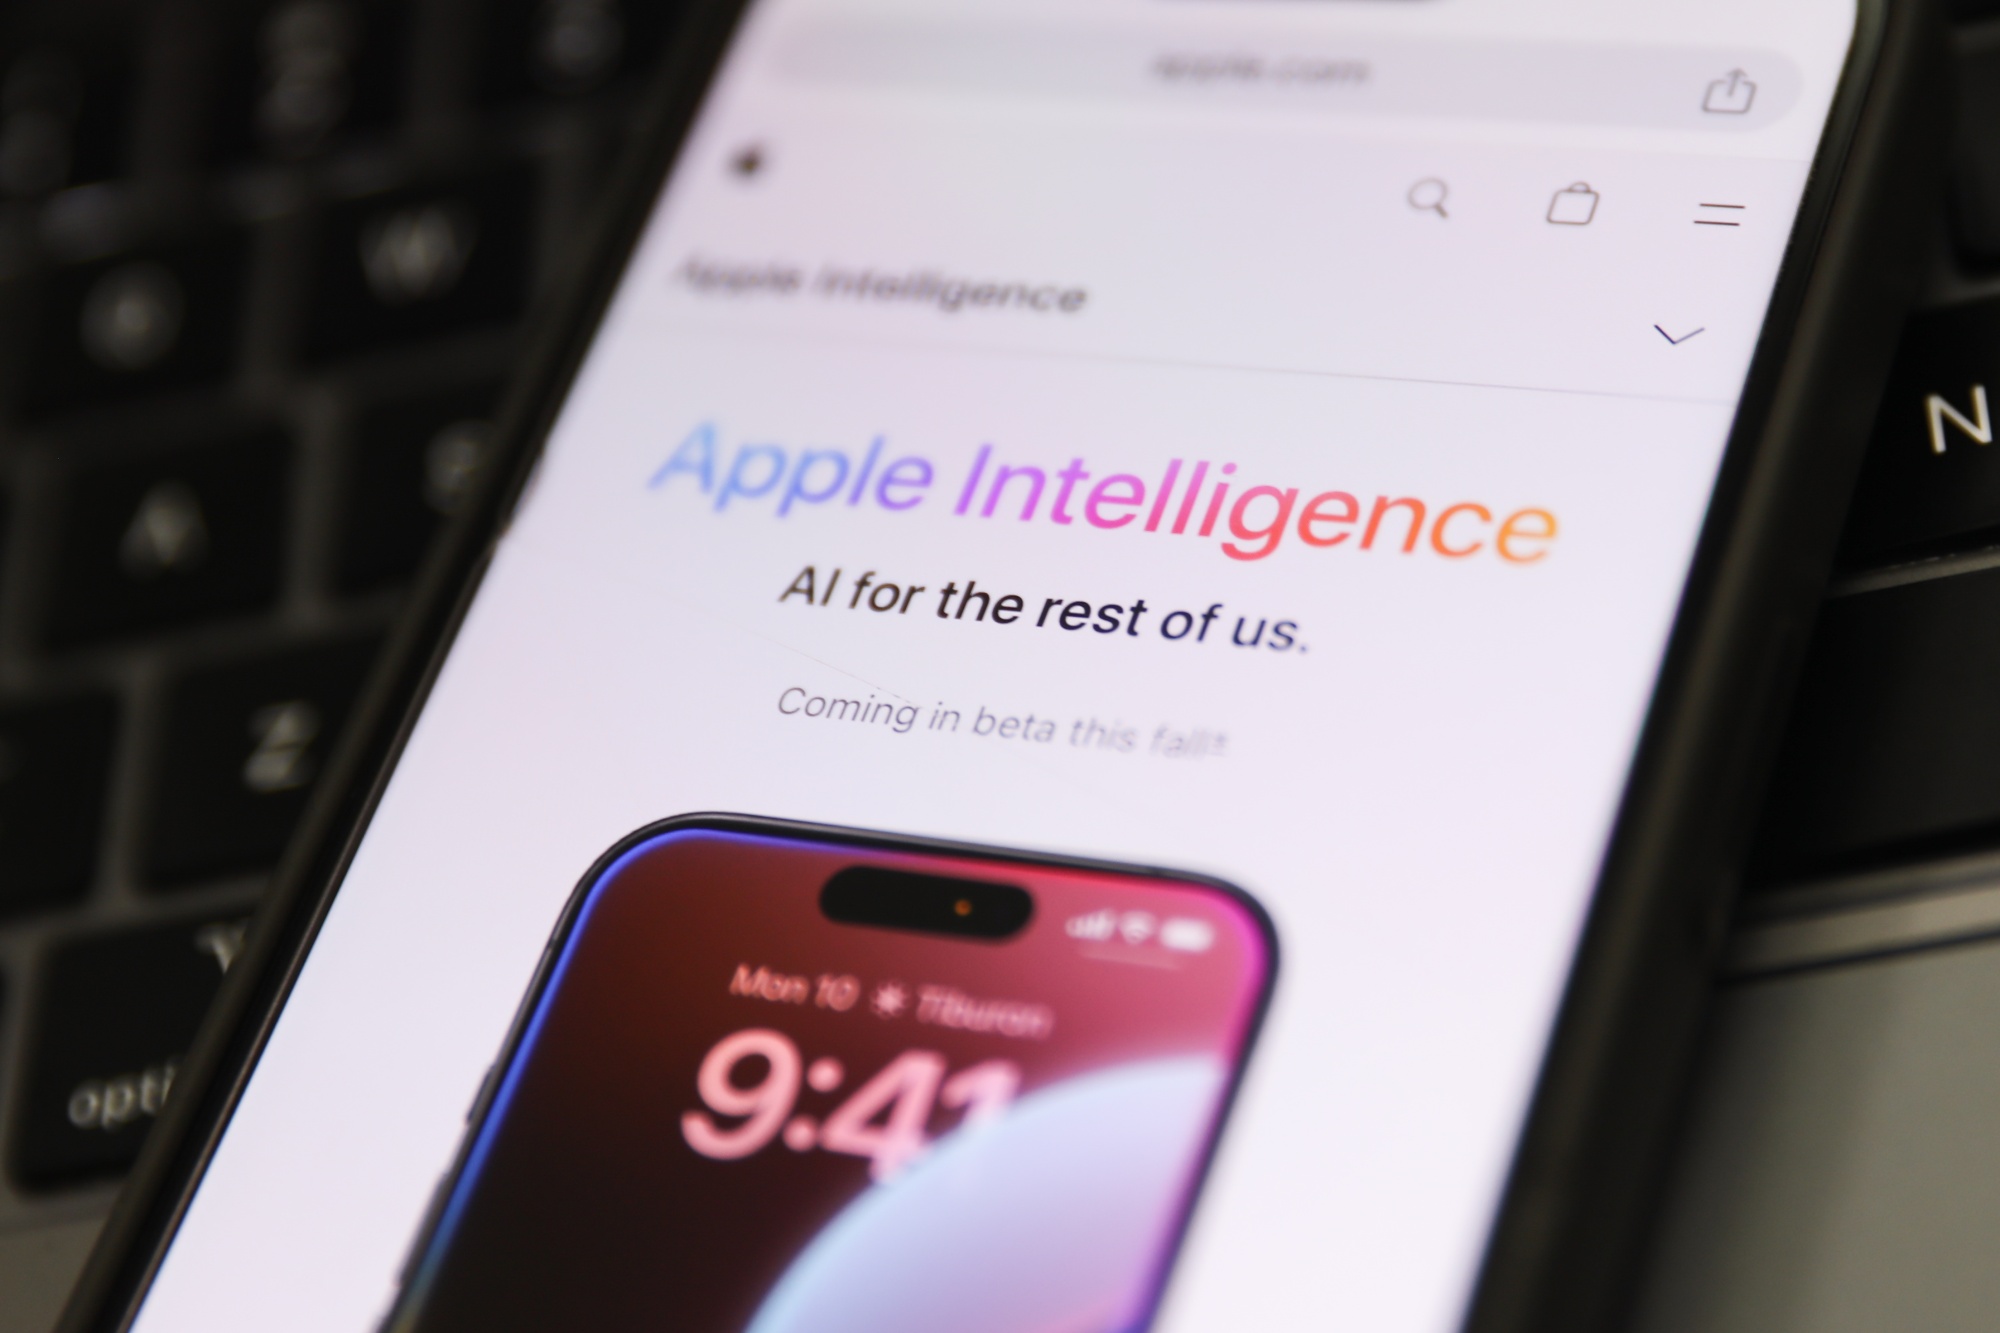 The Apple Intelligence logo on the company’s website.